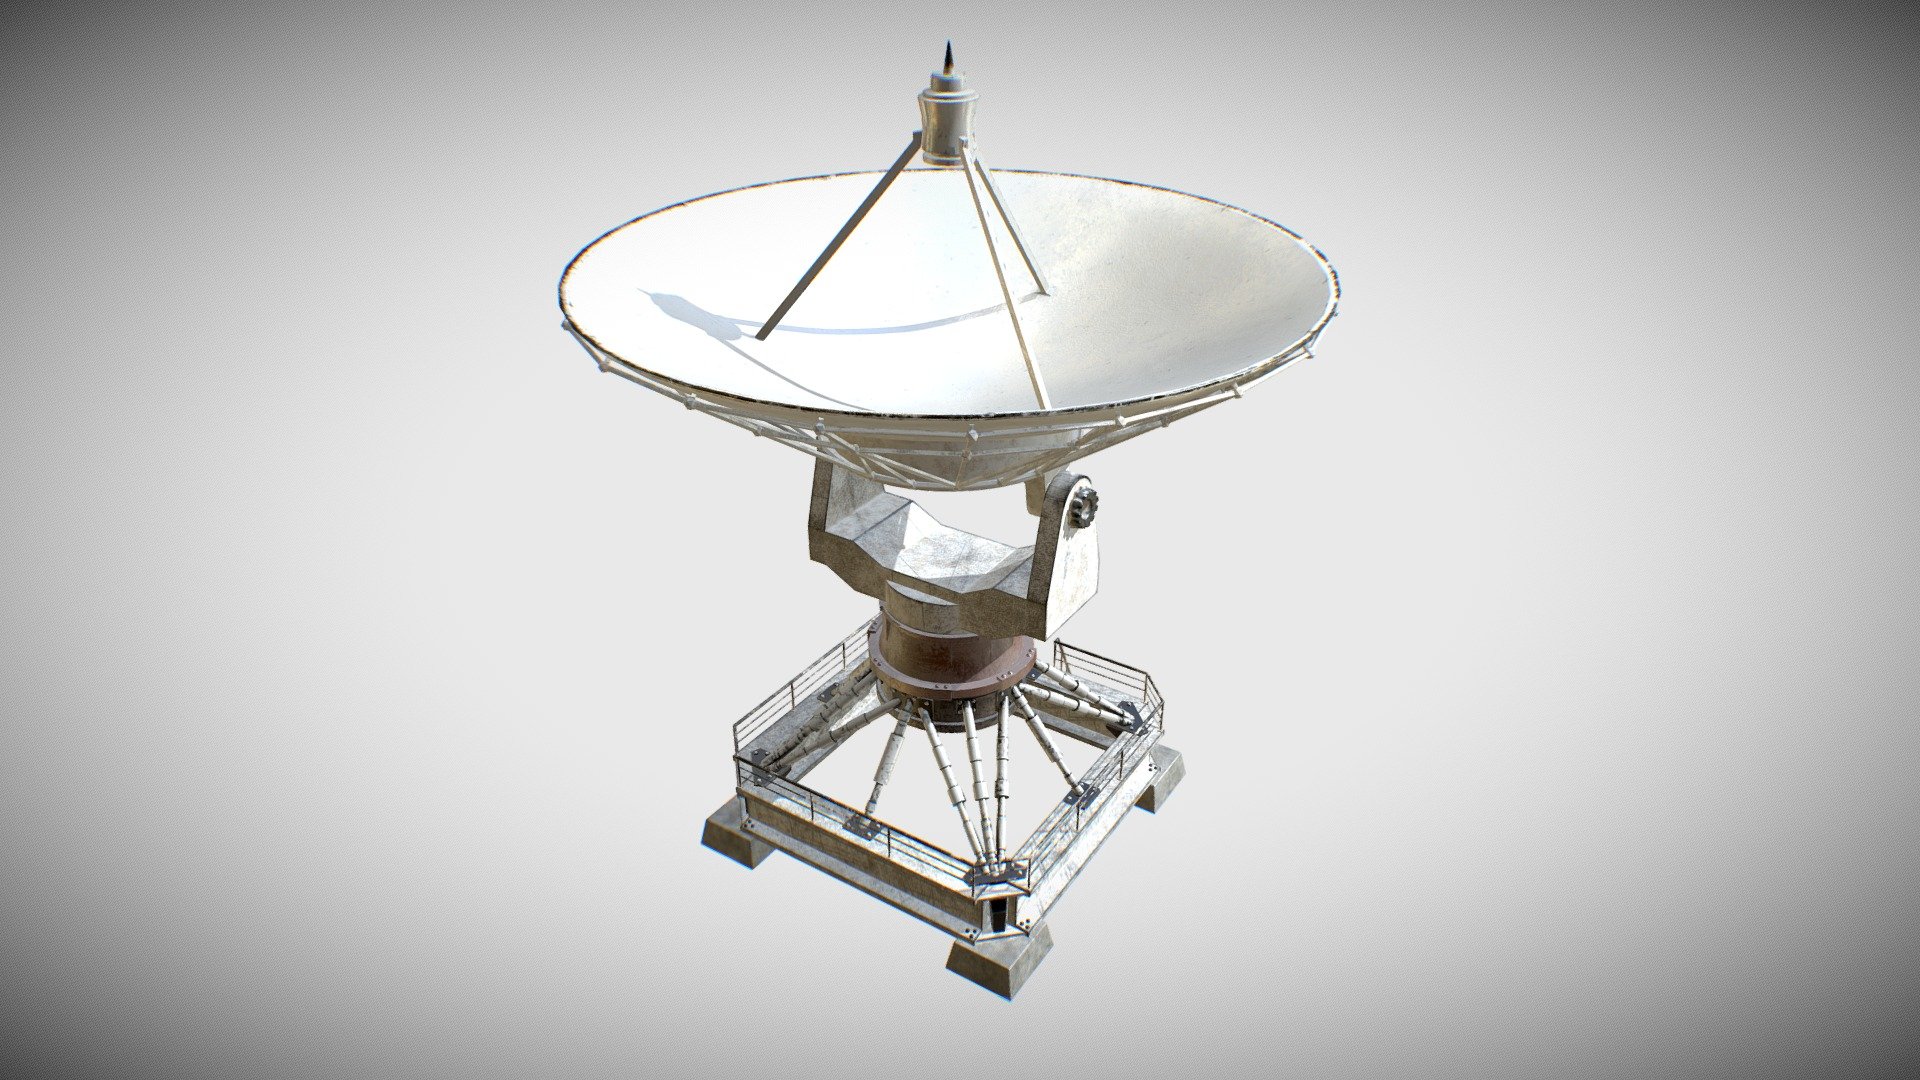 3d model of the radar - Radar PBR - 3D model by djkorg 3d model